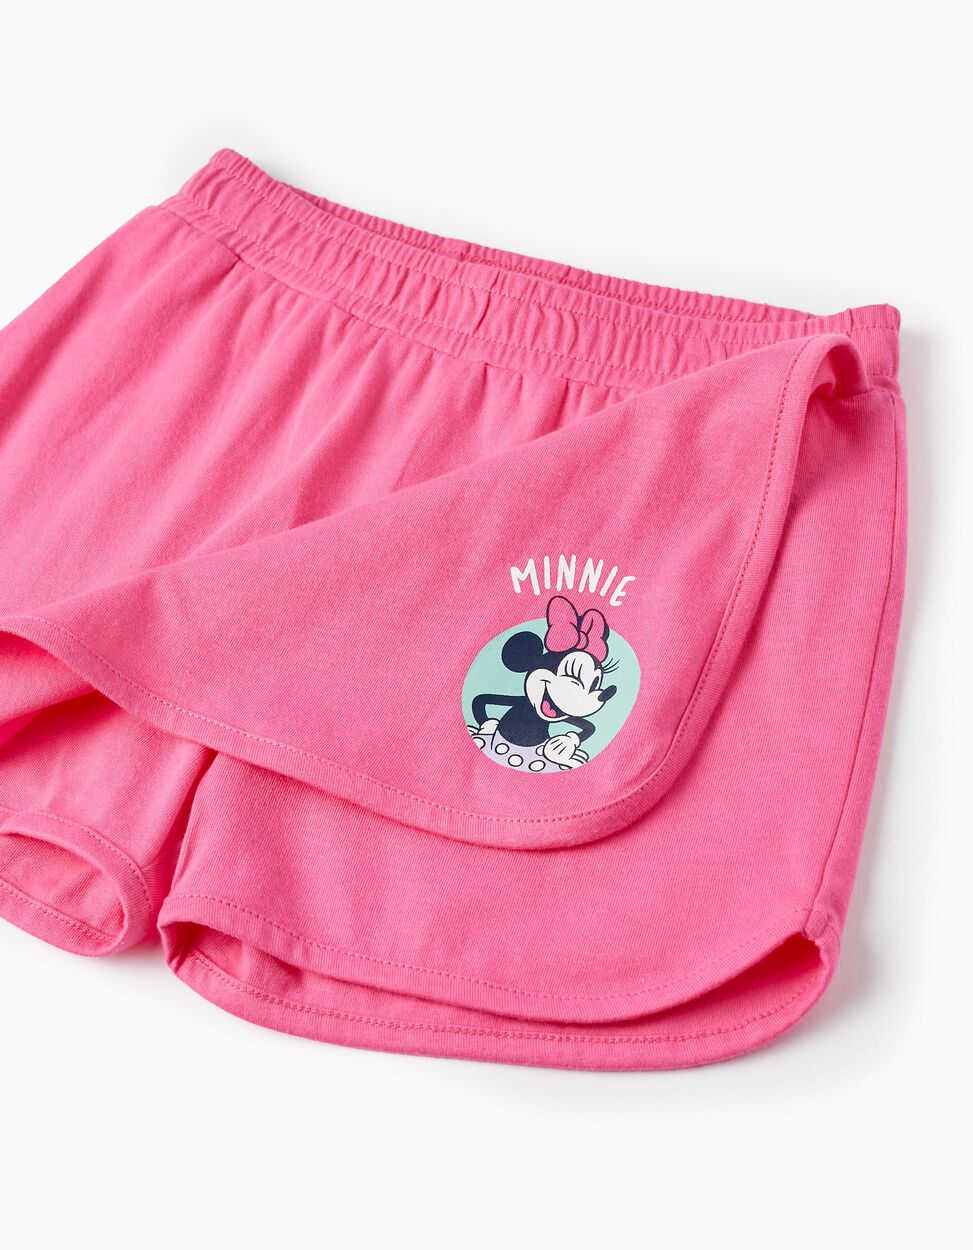 Comprar Online Falda-Pantalón de Algodón para Niña 'Minnie', Rosa